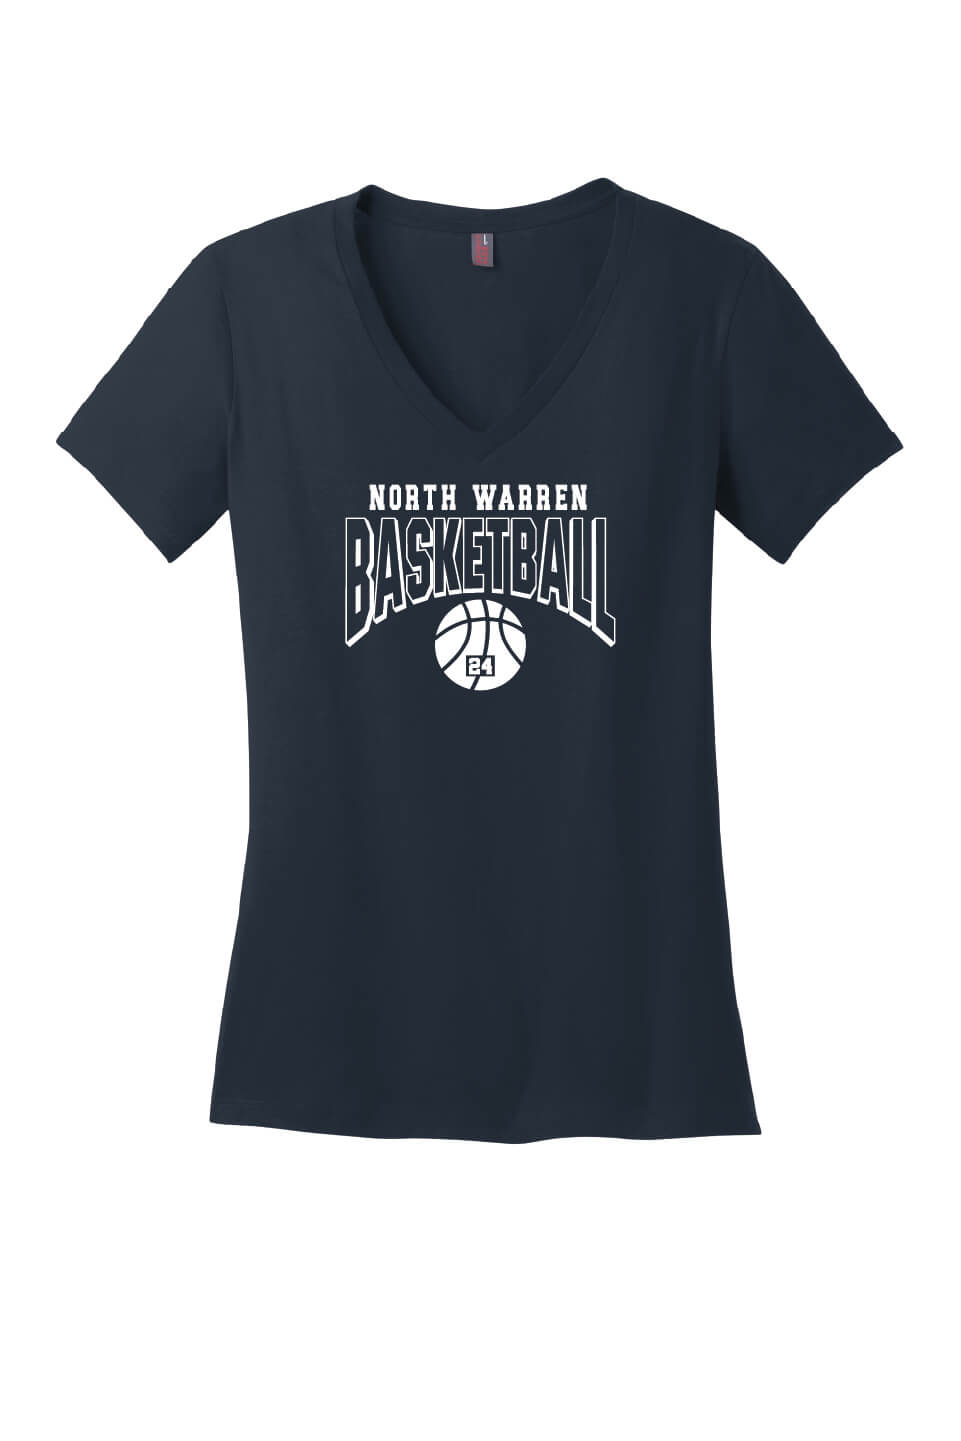 Basketball V-Neck Short Sleeve T-Shirt (Ladies) navy